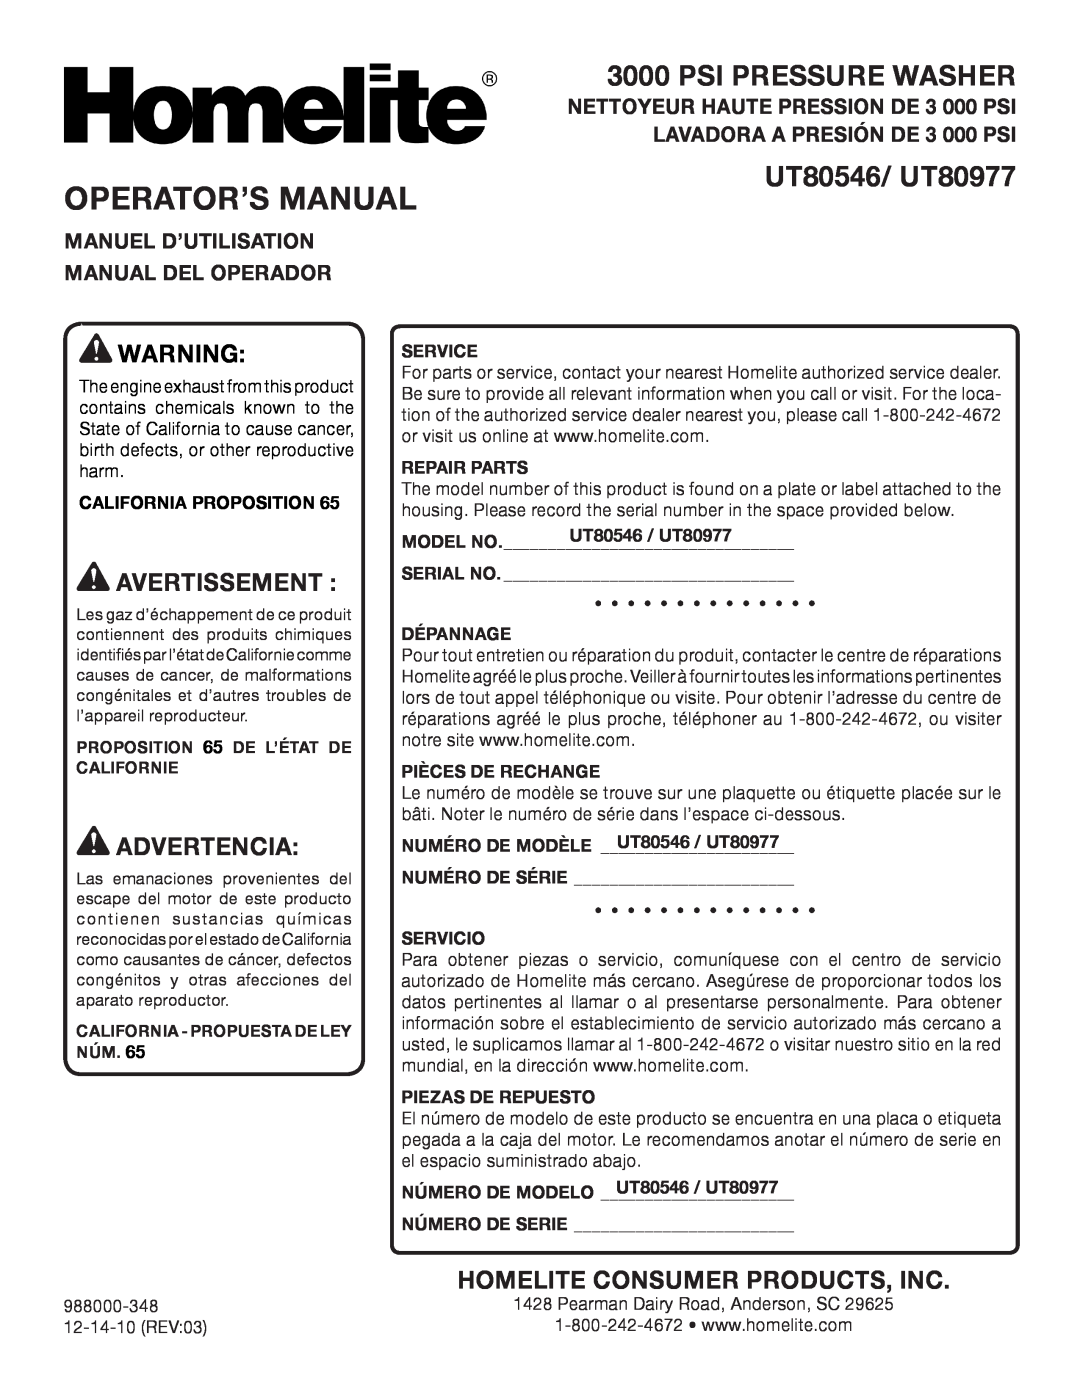 Homelite manuel dutilisation Operator’S Manual, Psi Pressure Washer, UT80546/ UT80977, Avertissement , Advertencia 